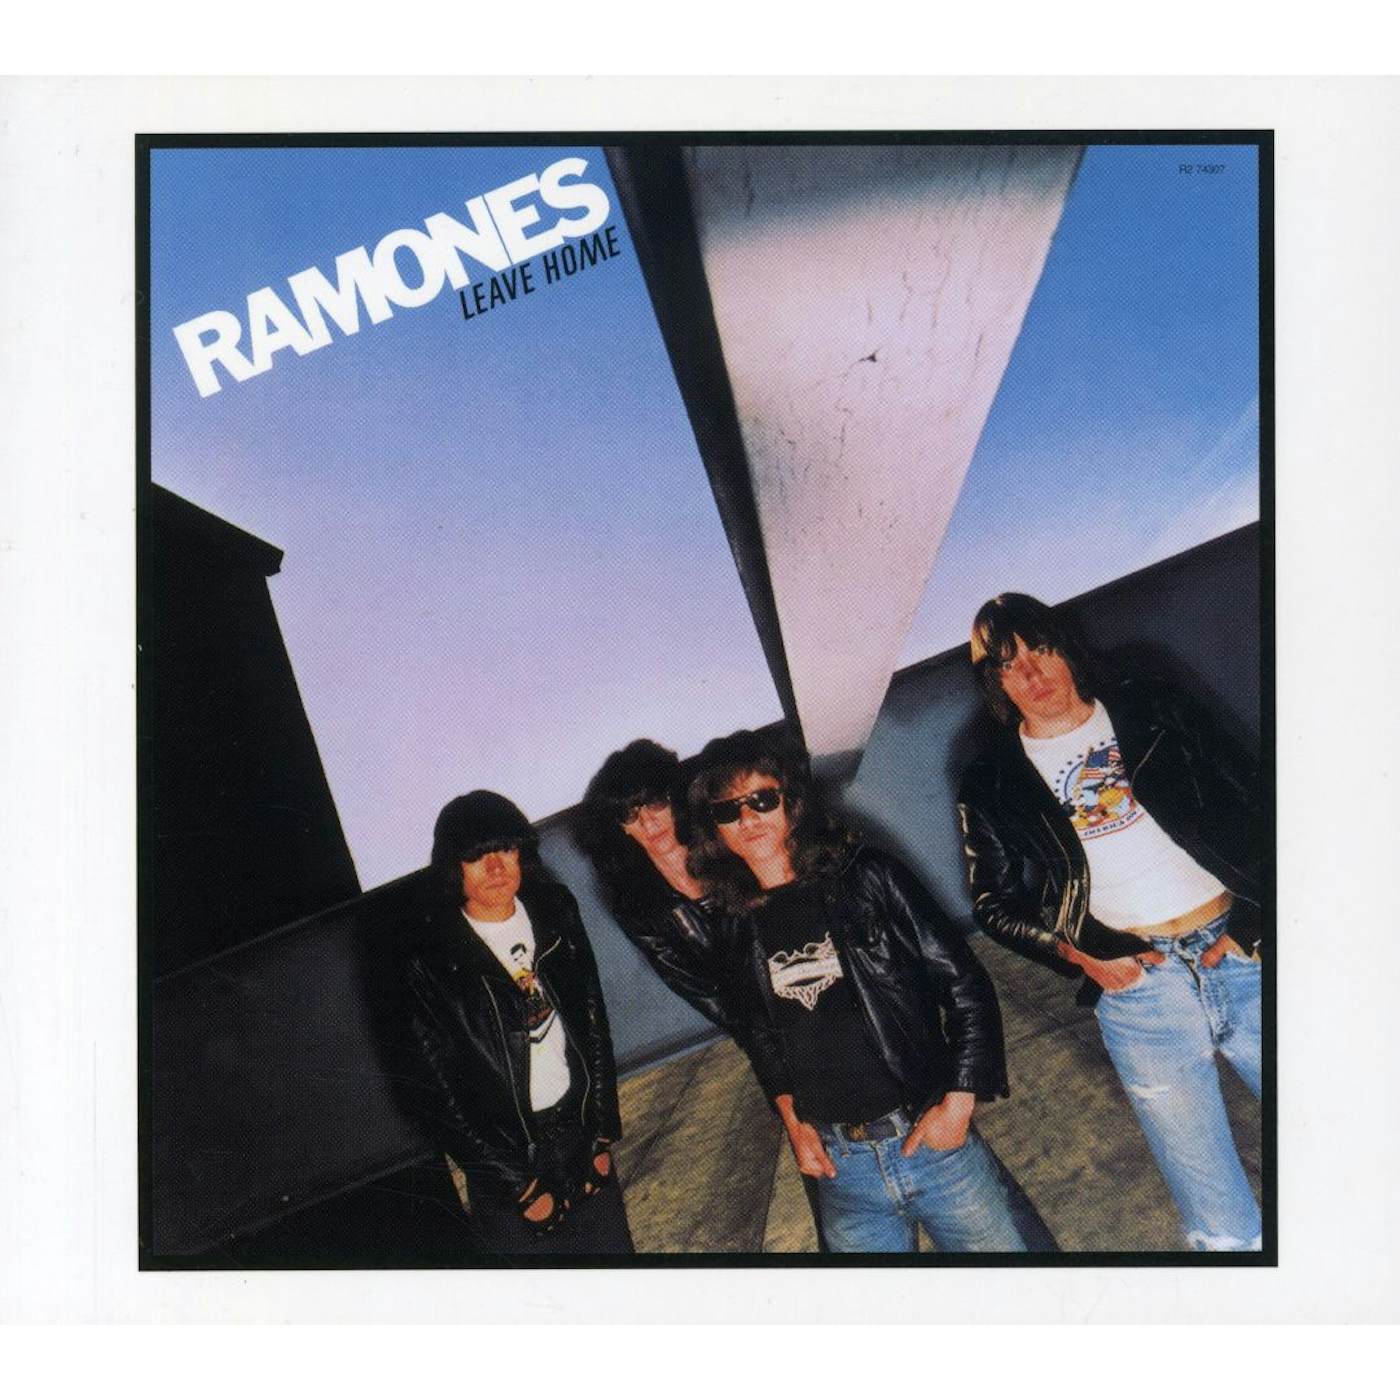 Ramones LEAVE HOME CD